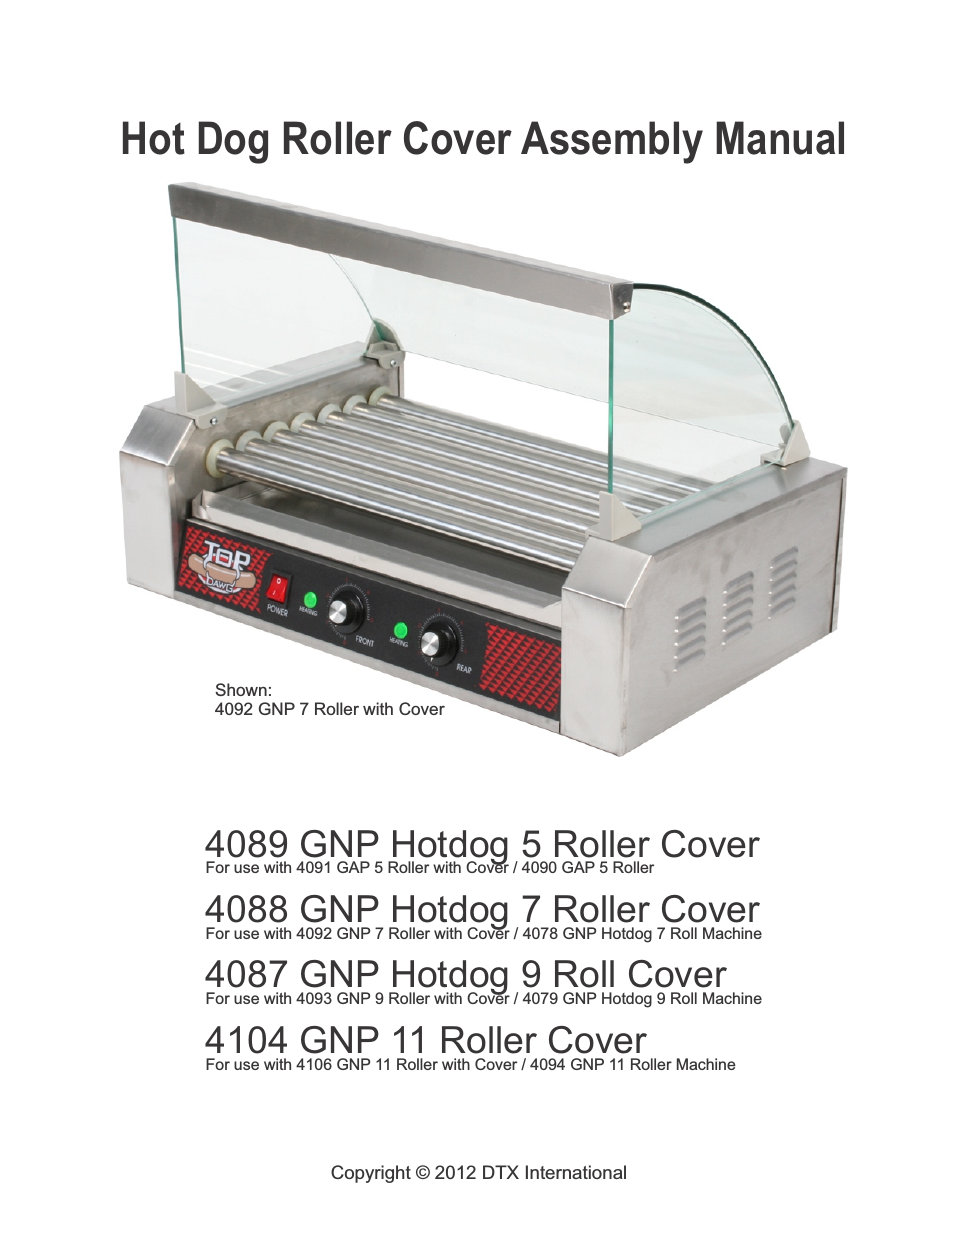 4088 GNP Hotdog 7 Roller Cover